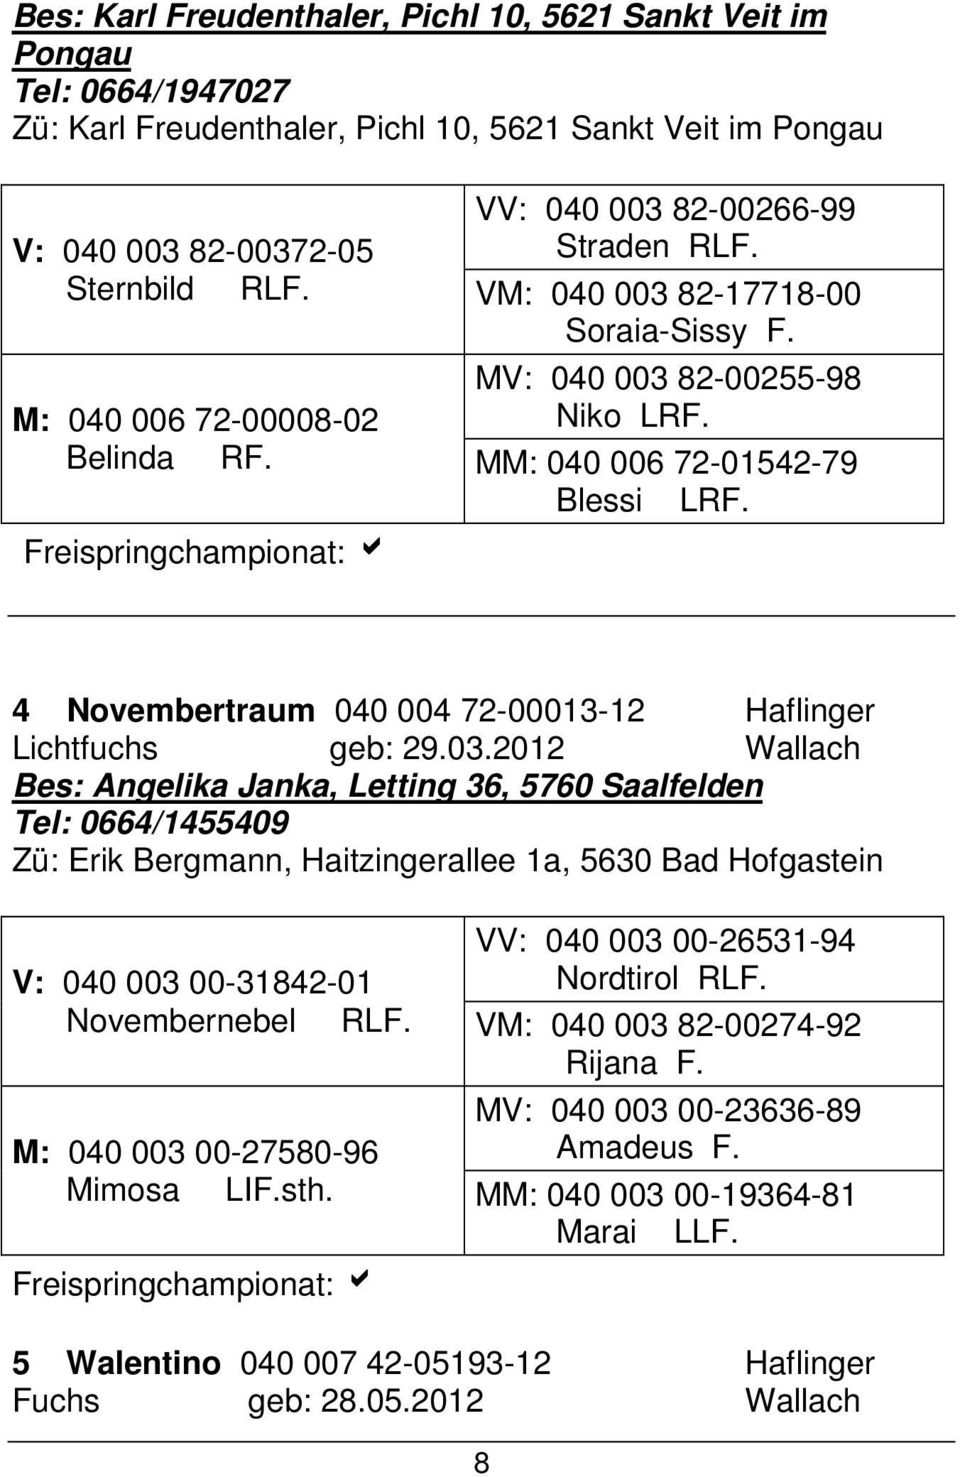 4 Novembertraum 040 004 72-00013-12 Haflinger Lichtfuchs geb: 29.03.